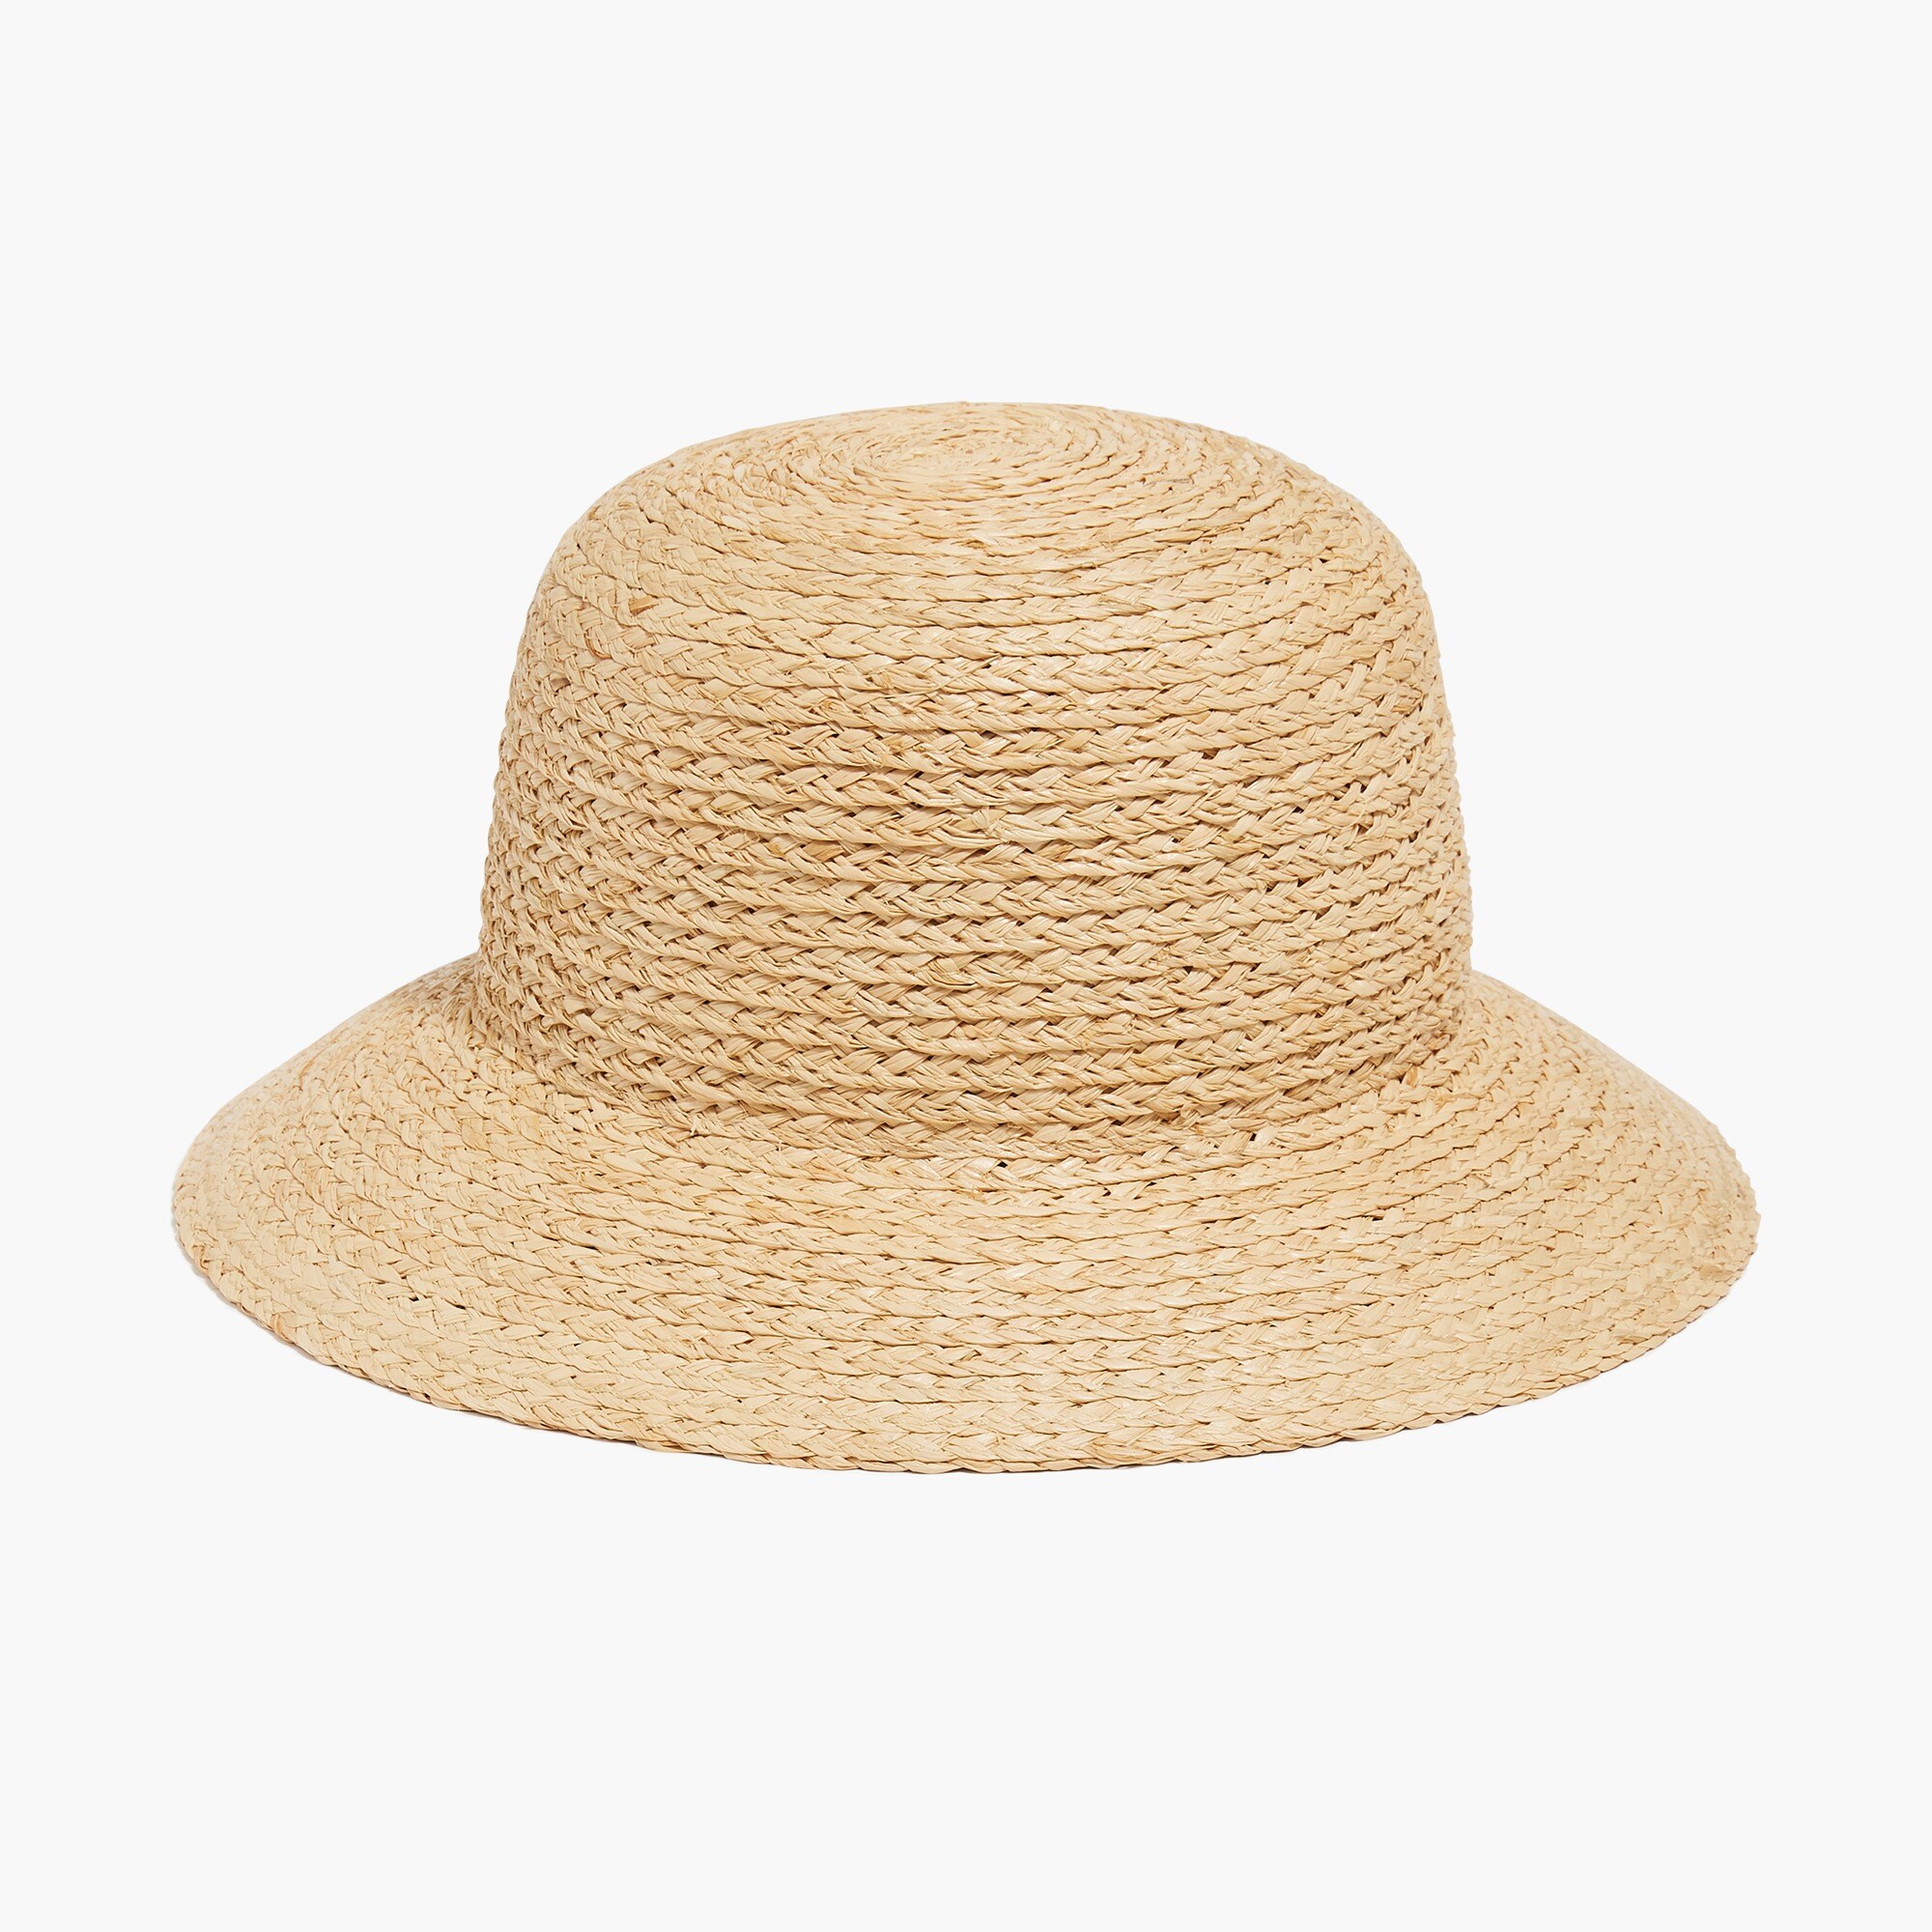 J.Crew Factory Women's Straw Bucket Hat (Natural Straw, Size Small-Medium)